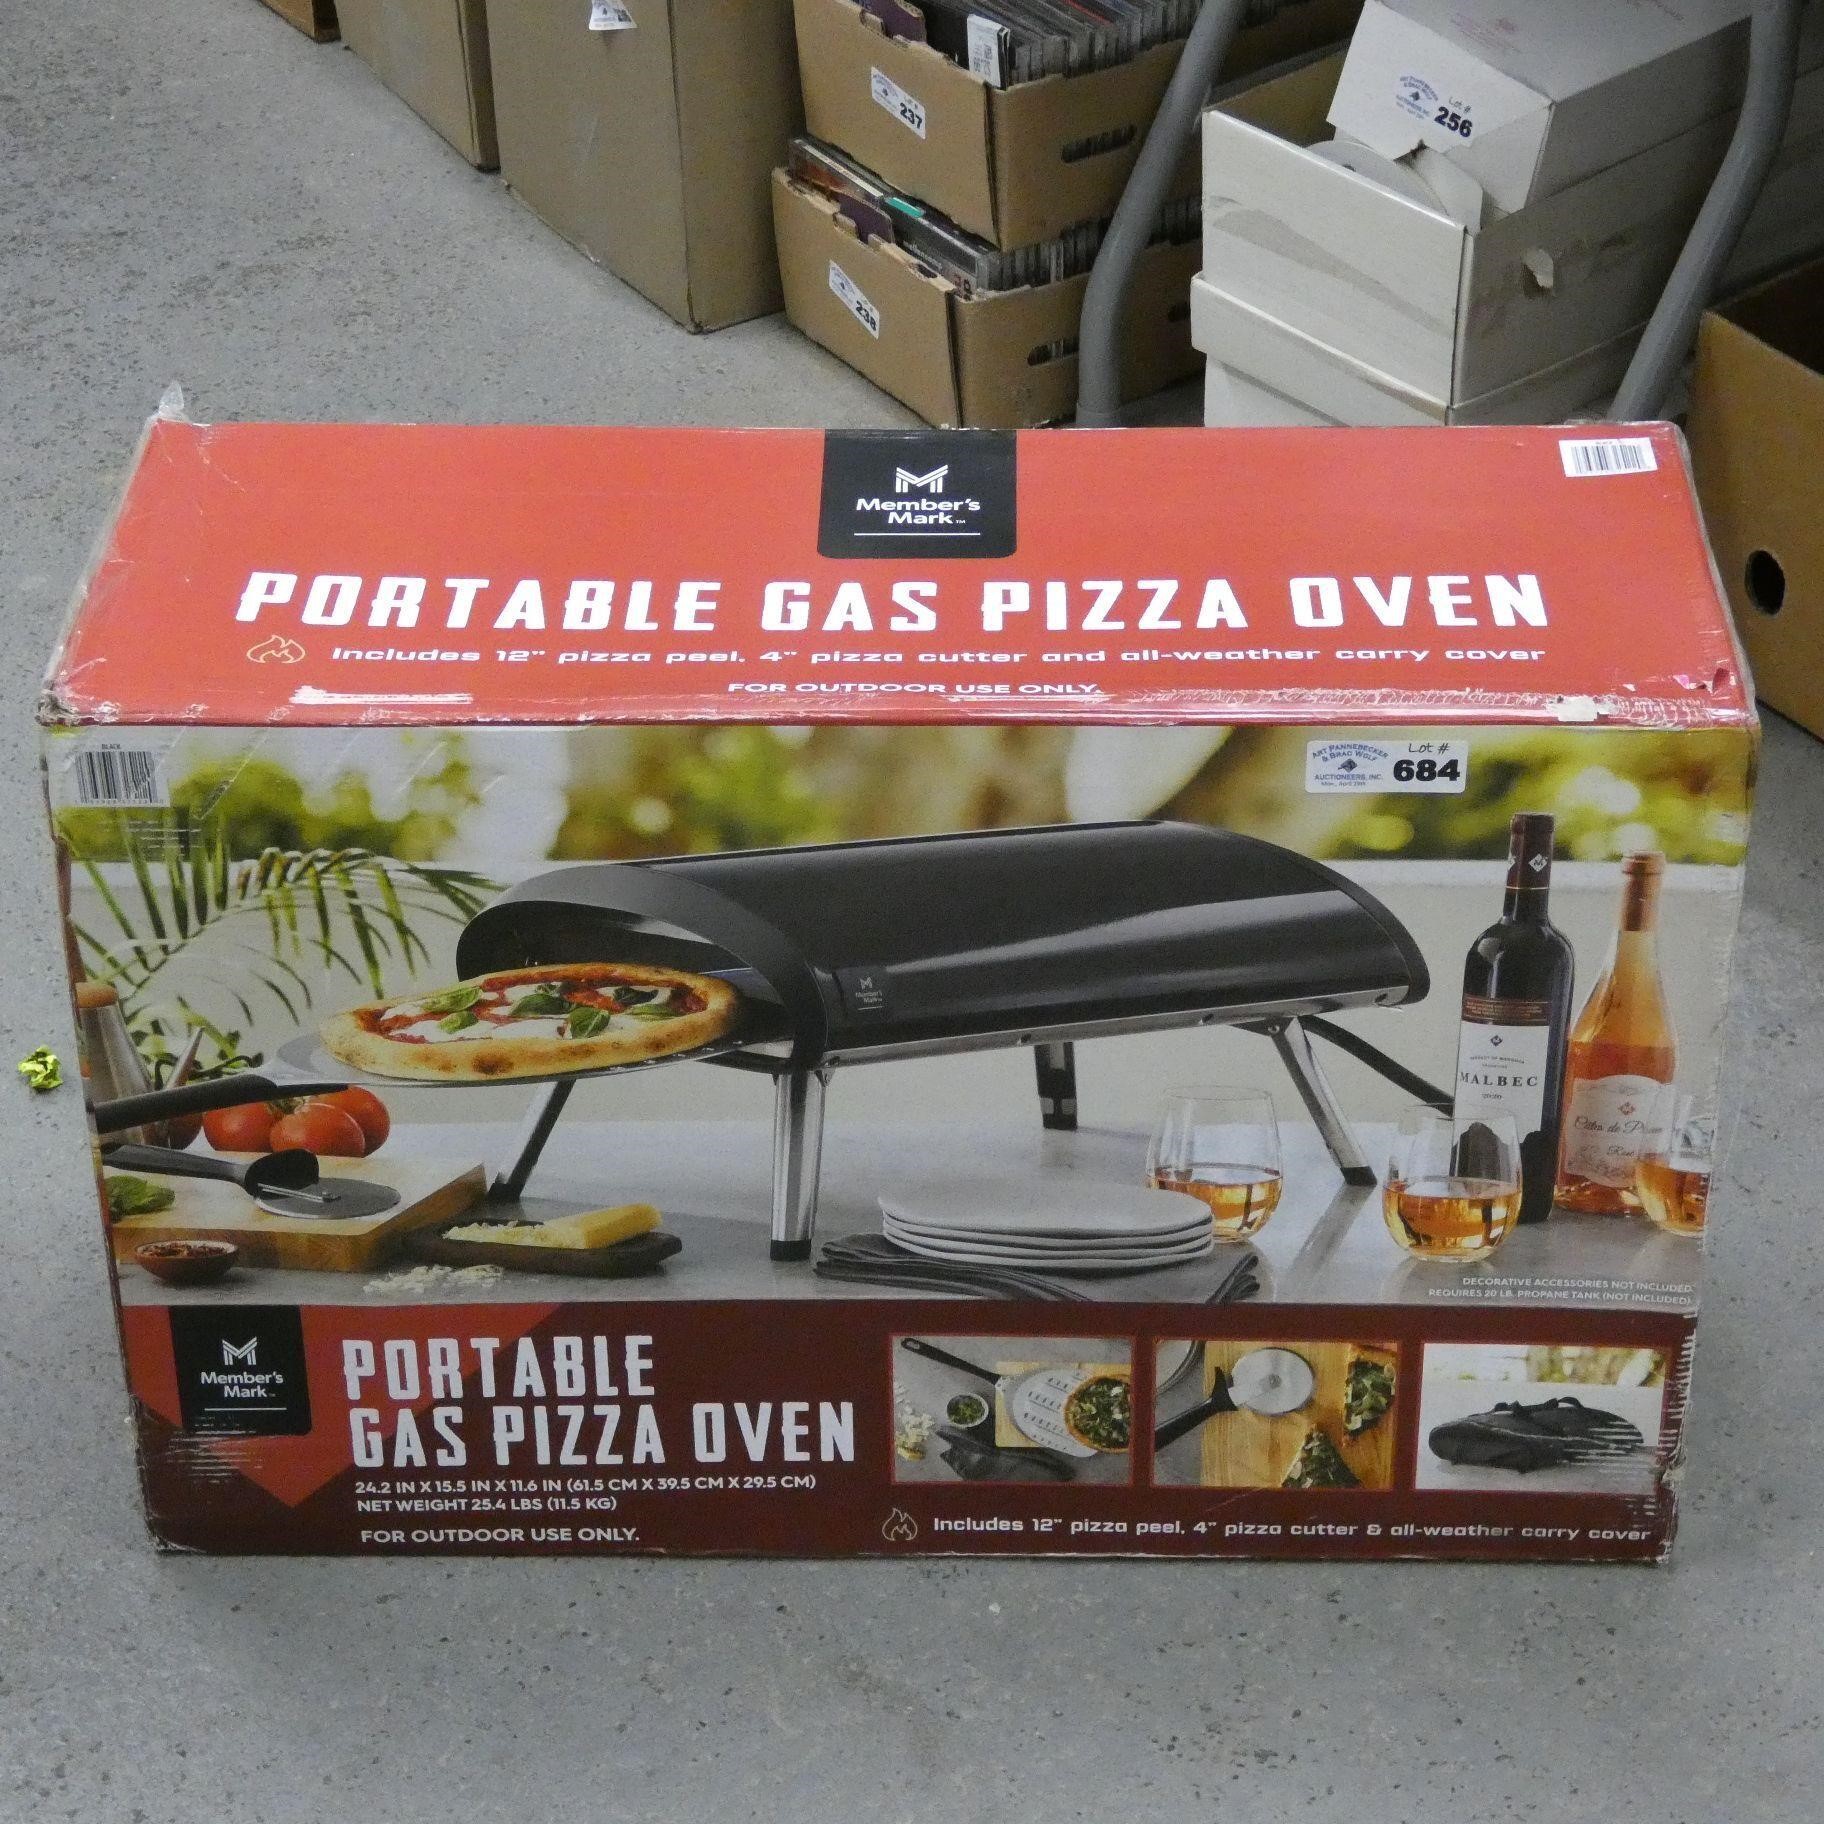 NEW Member's Mark Portable Gas Pizza Oven - Black